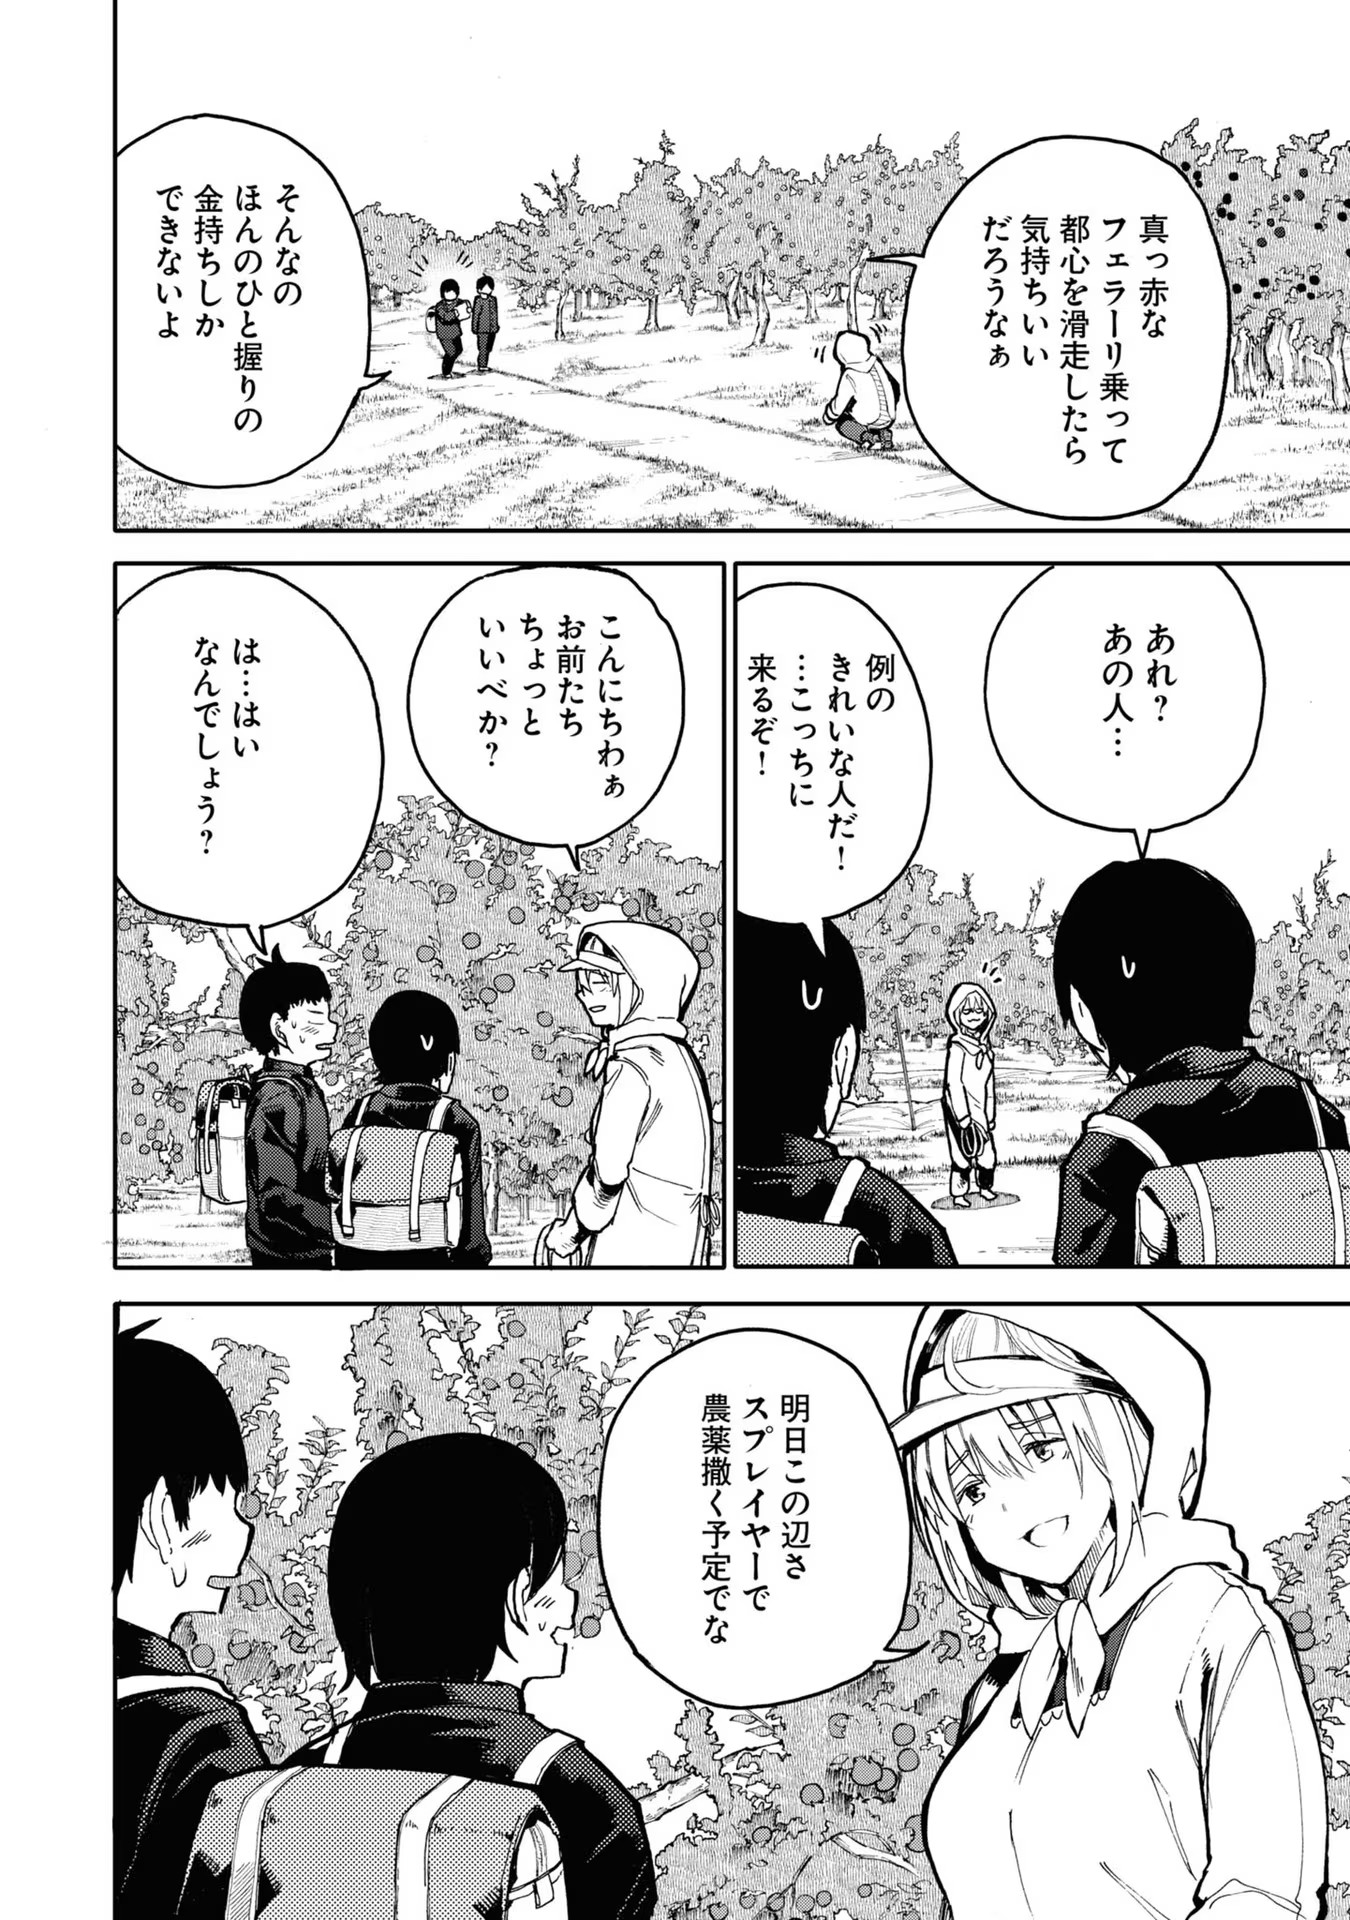 Ojii-san to Obaa-san ga Wakigaetta Hanashi - Chapter 61 - Page 2